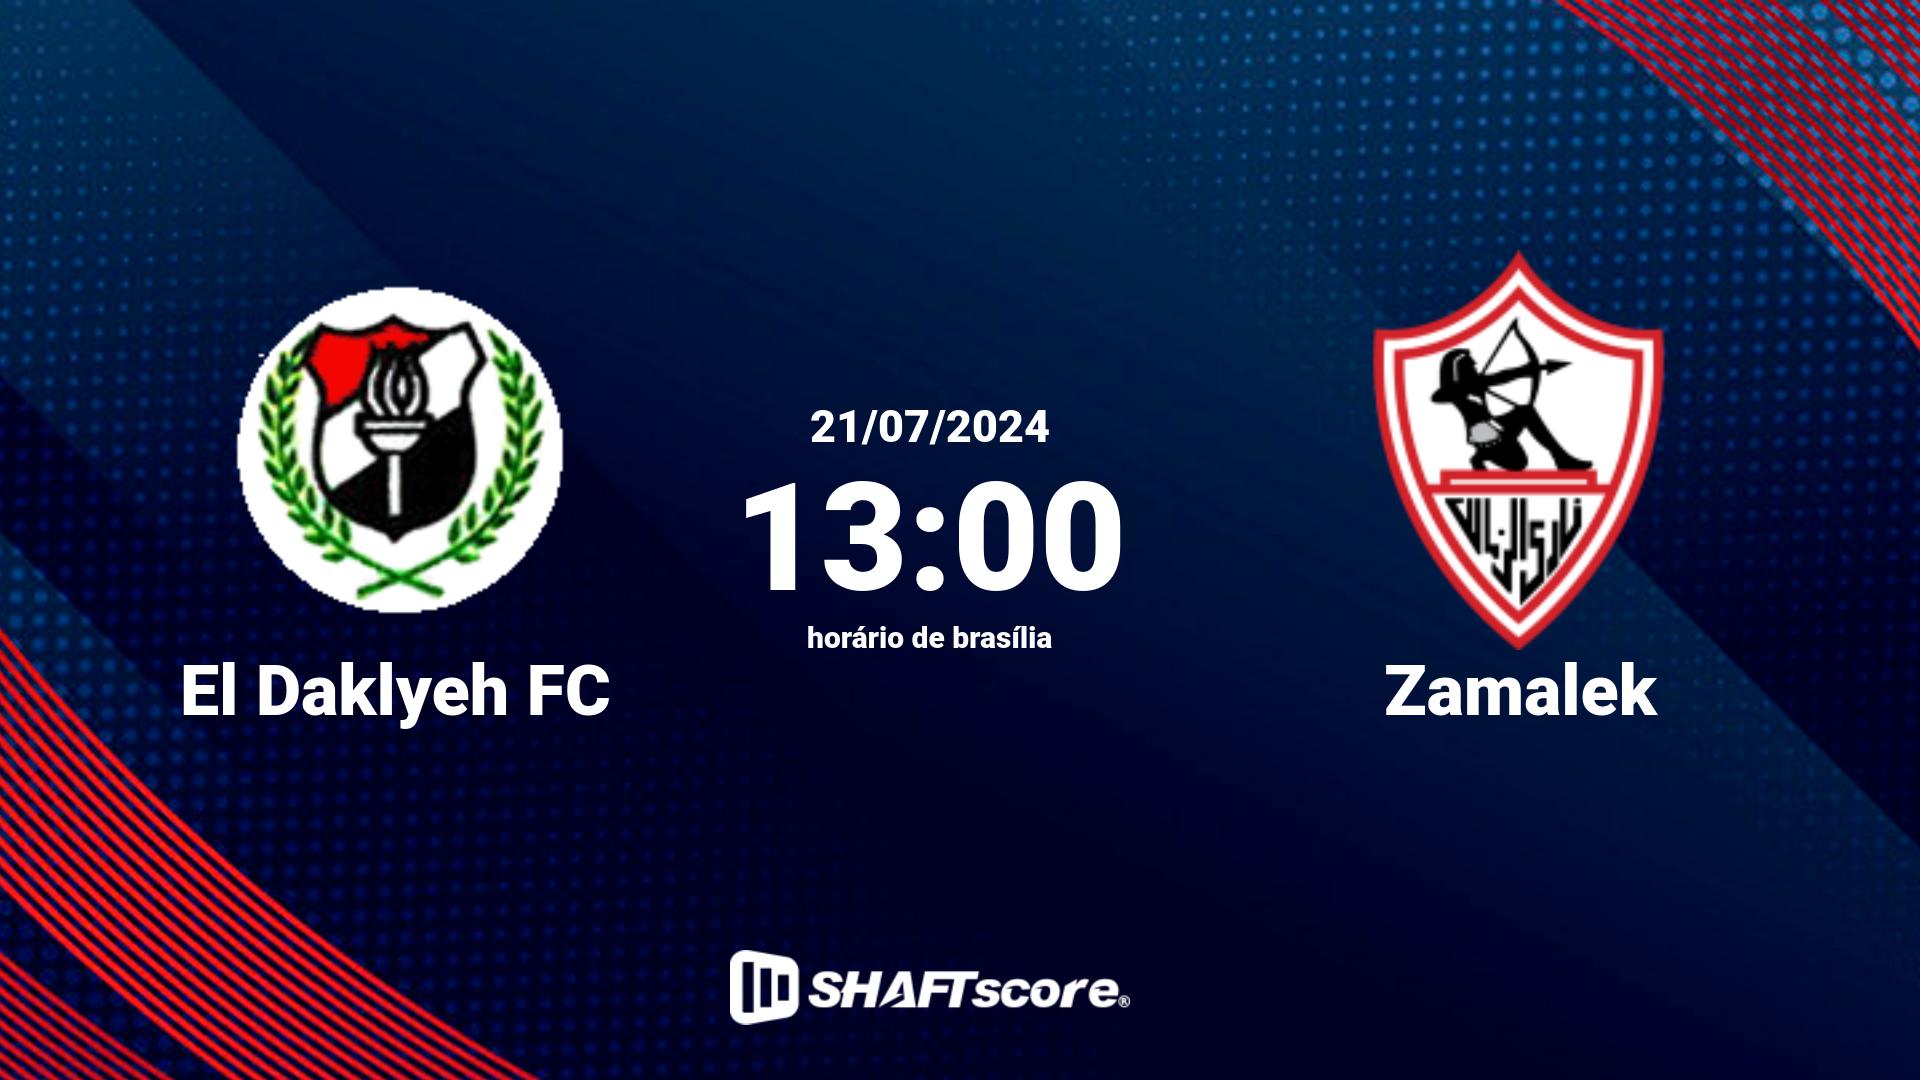 Estatísticas do jogo El Daklyeh FC vs Zamalek 21.07 13:00